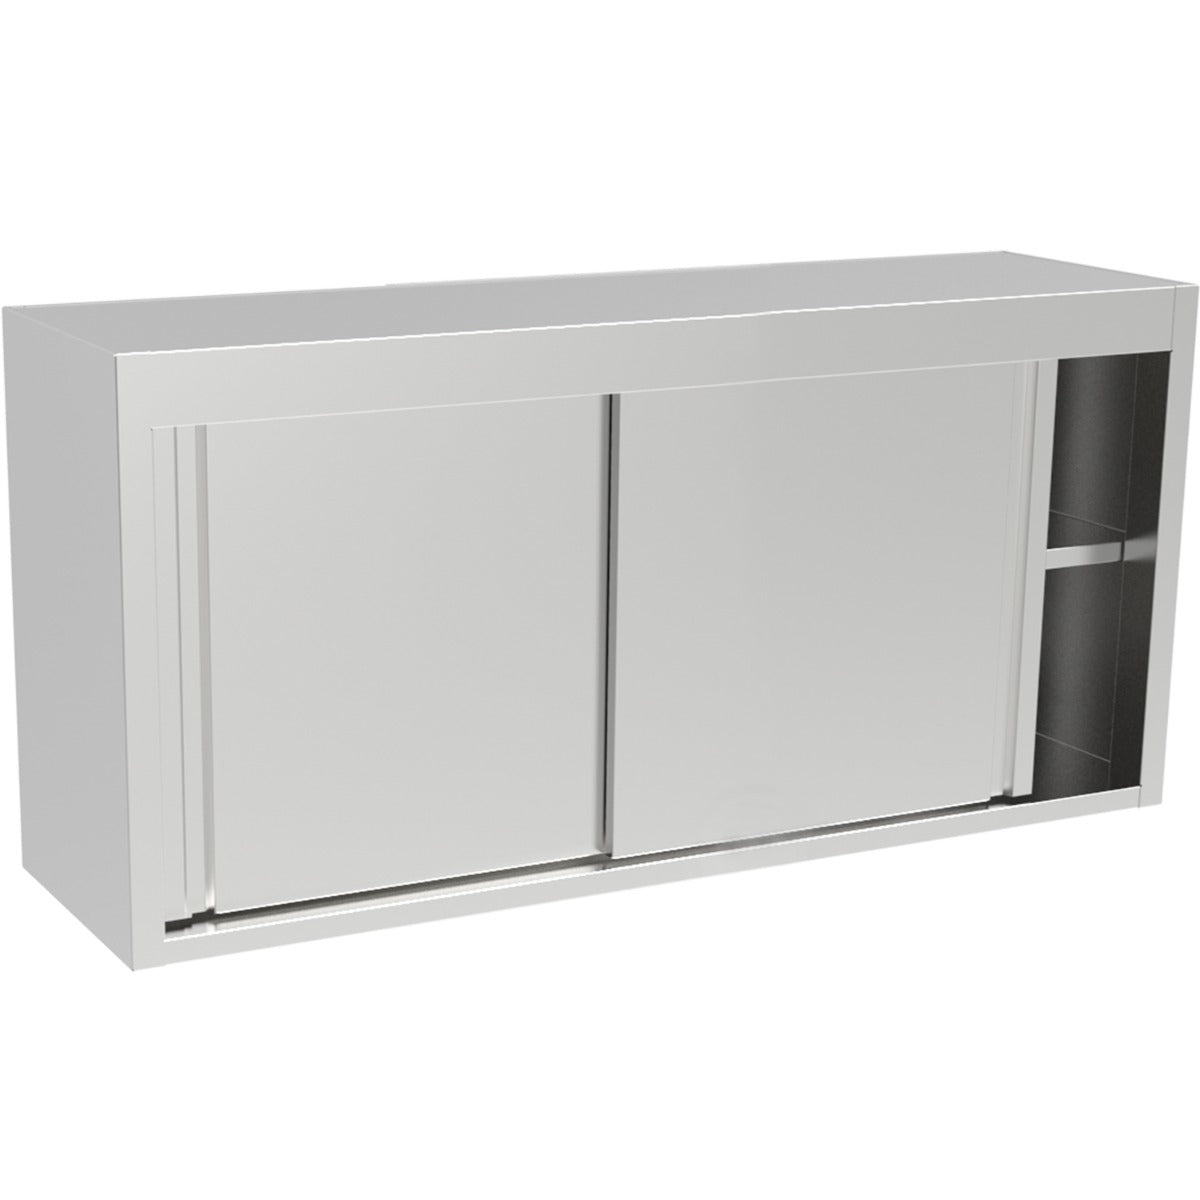 Inomak Wall mounted storage cupboard 1400mm Wide